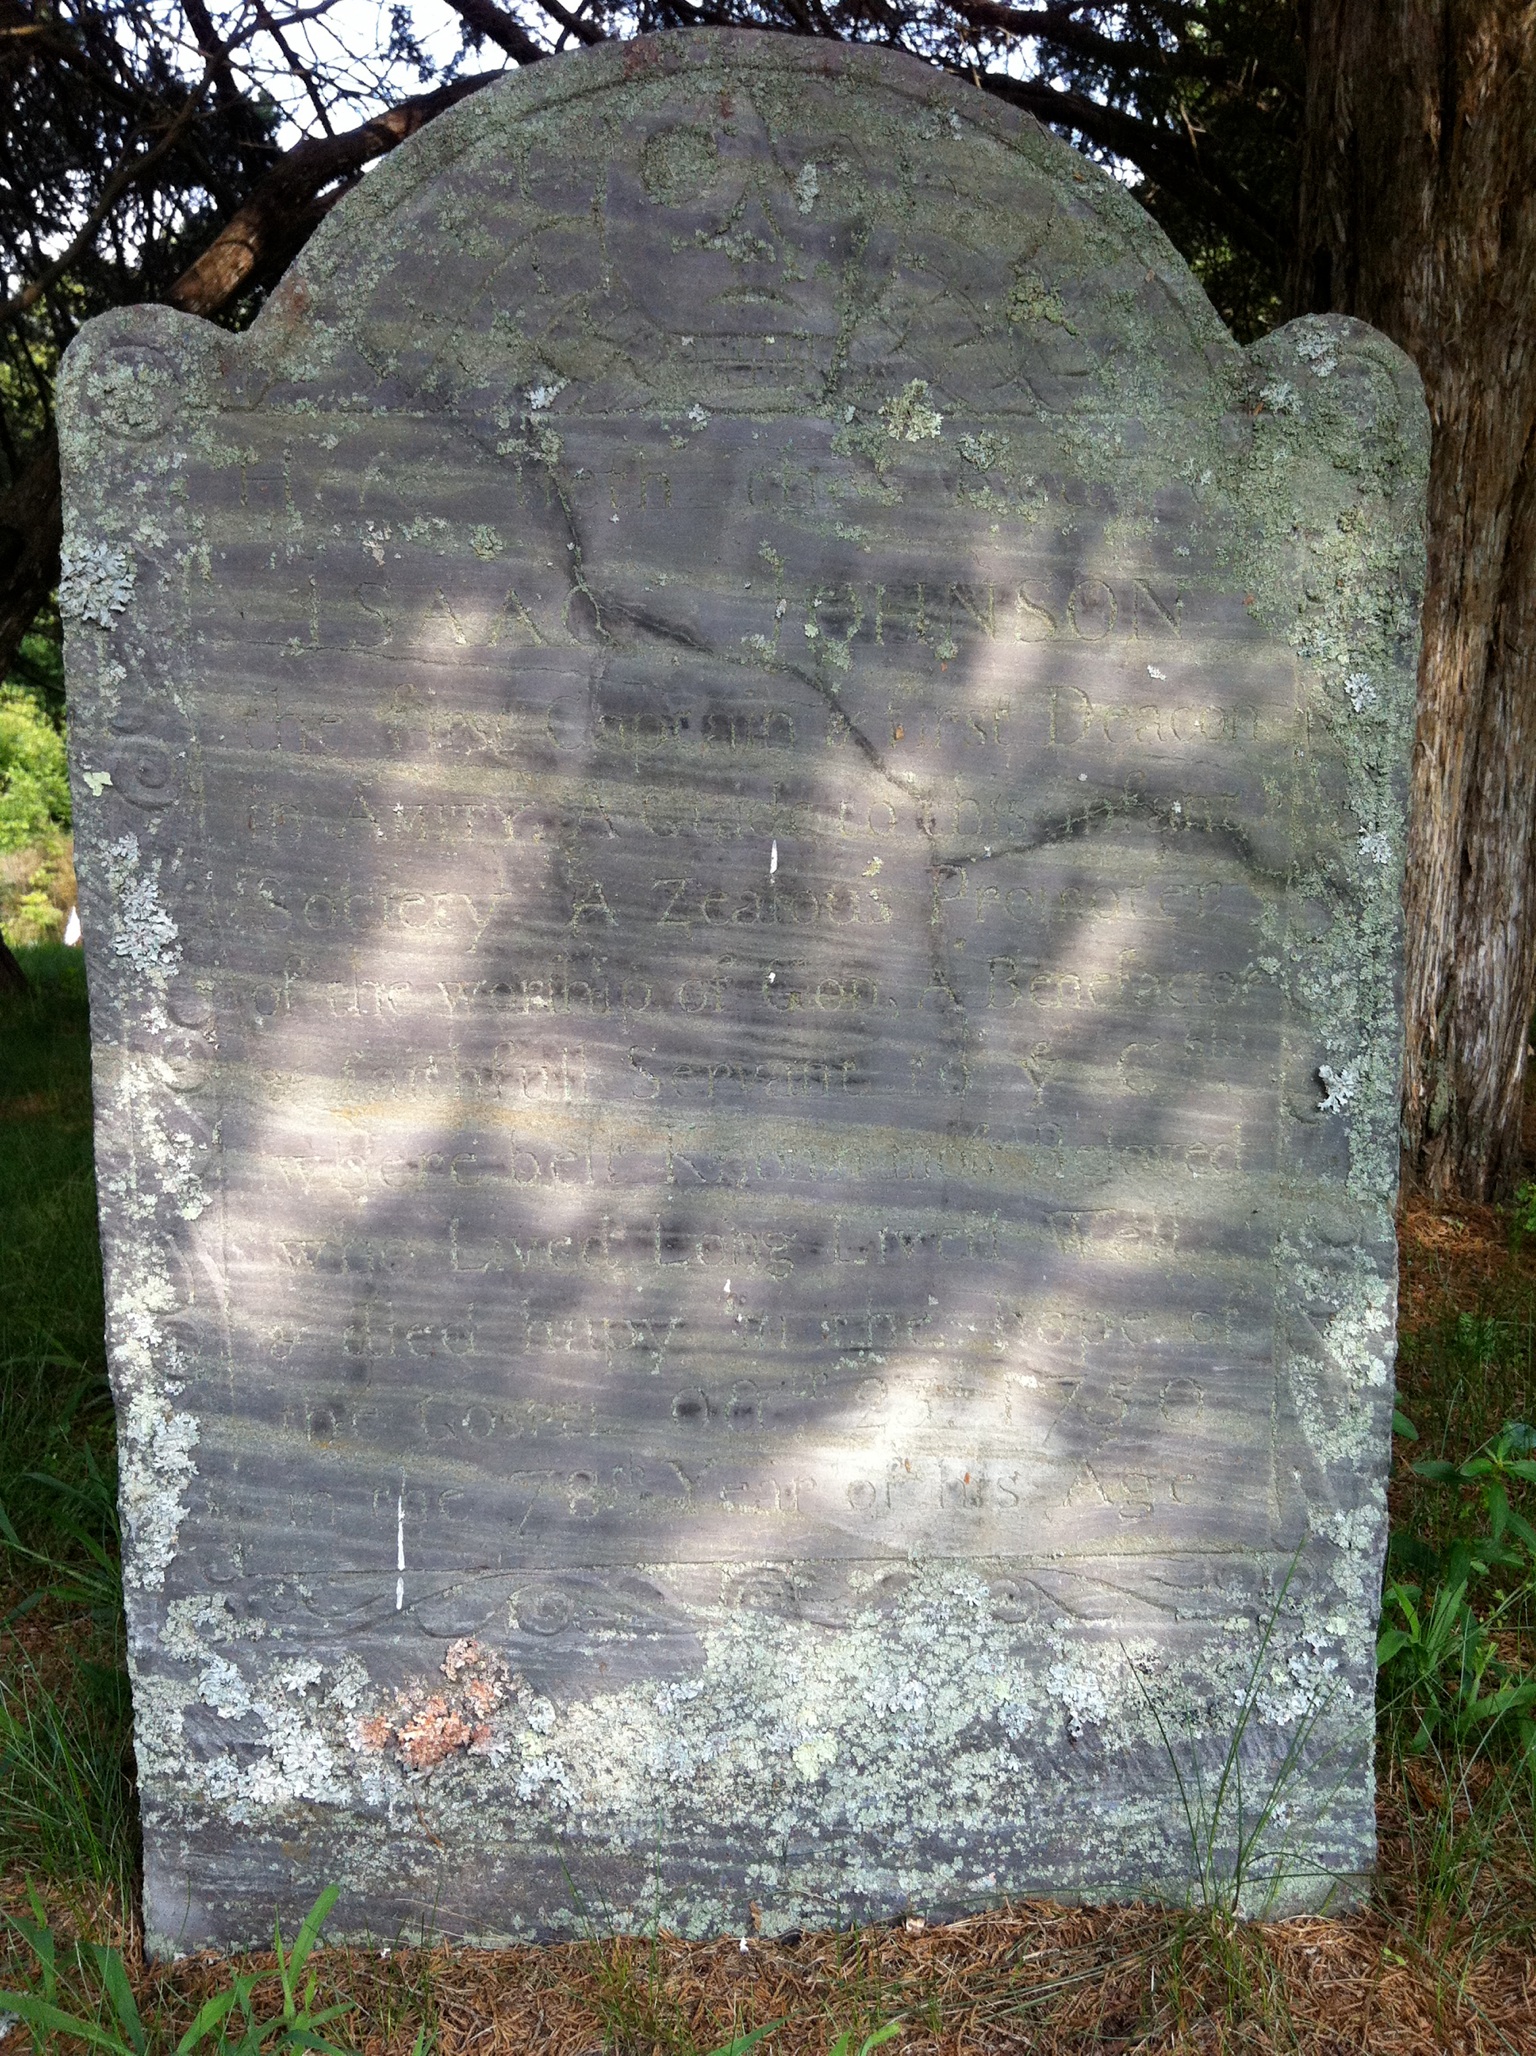 Gravestone of Captain Isaac Johnson, East Side Burying Ground, aka Middle Cemetery, Woodbridge, CT